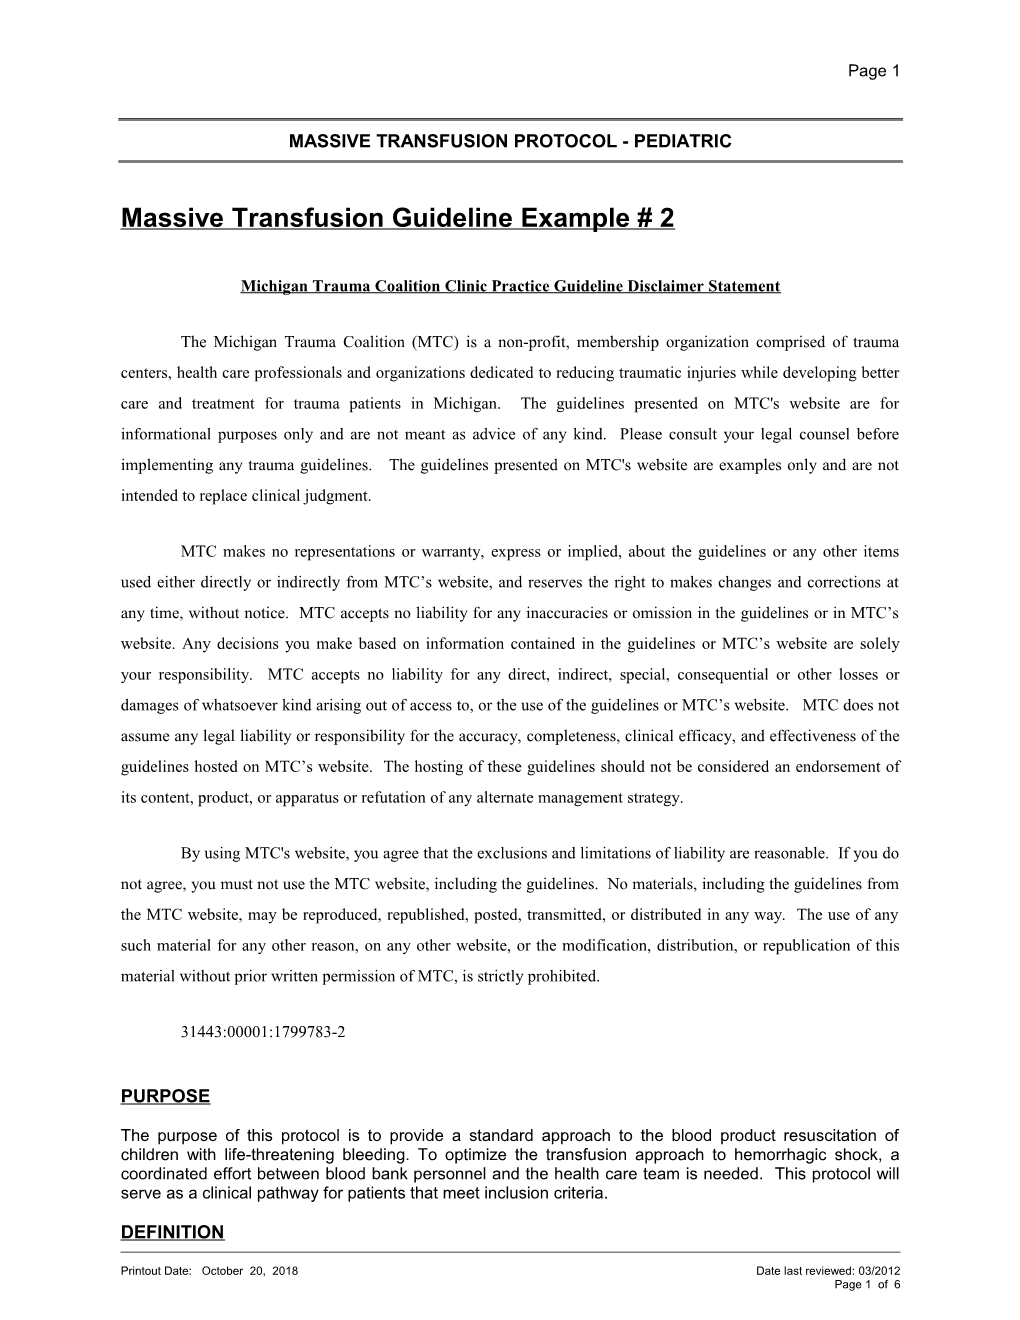 Massive Transfusion Guideline Example # 2